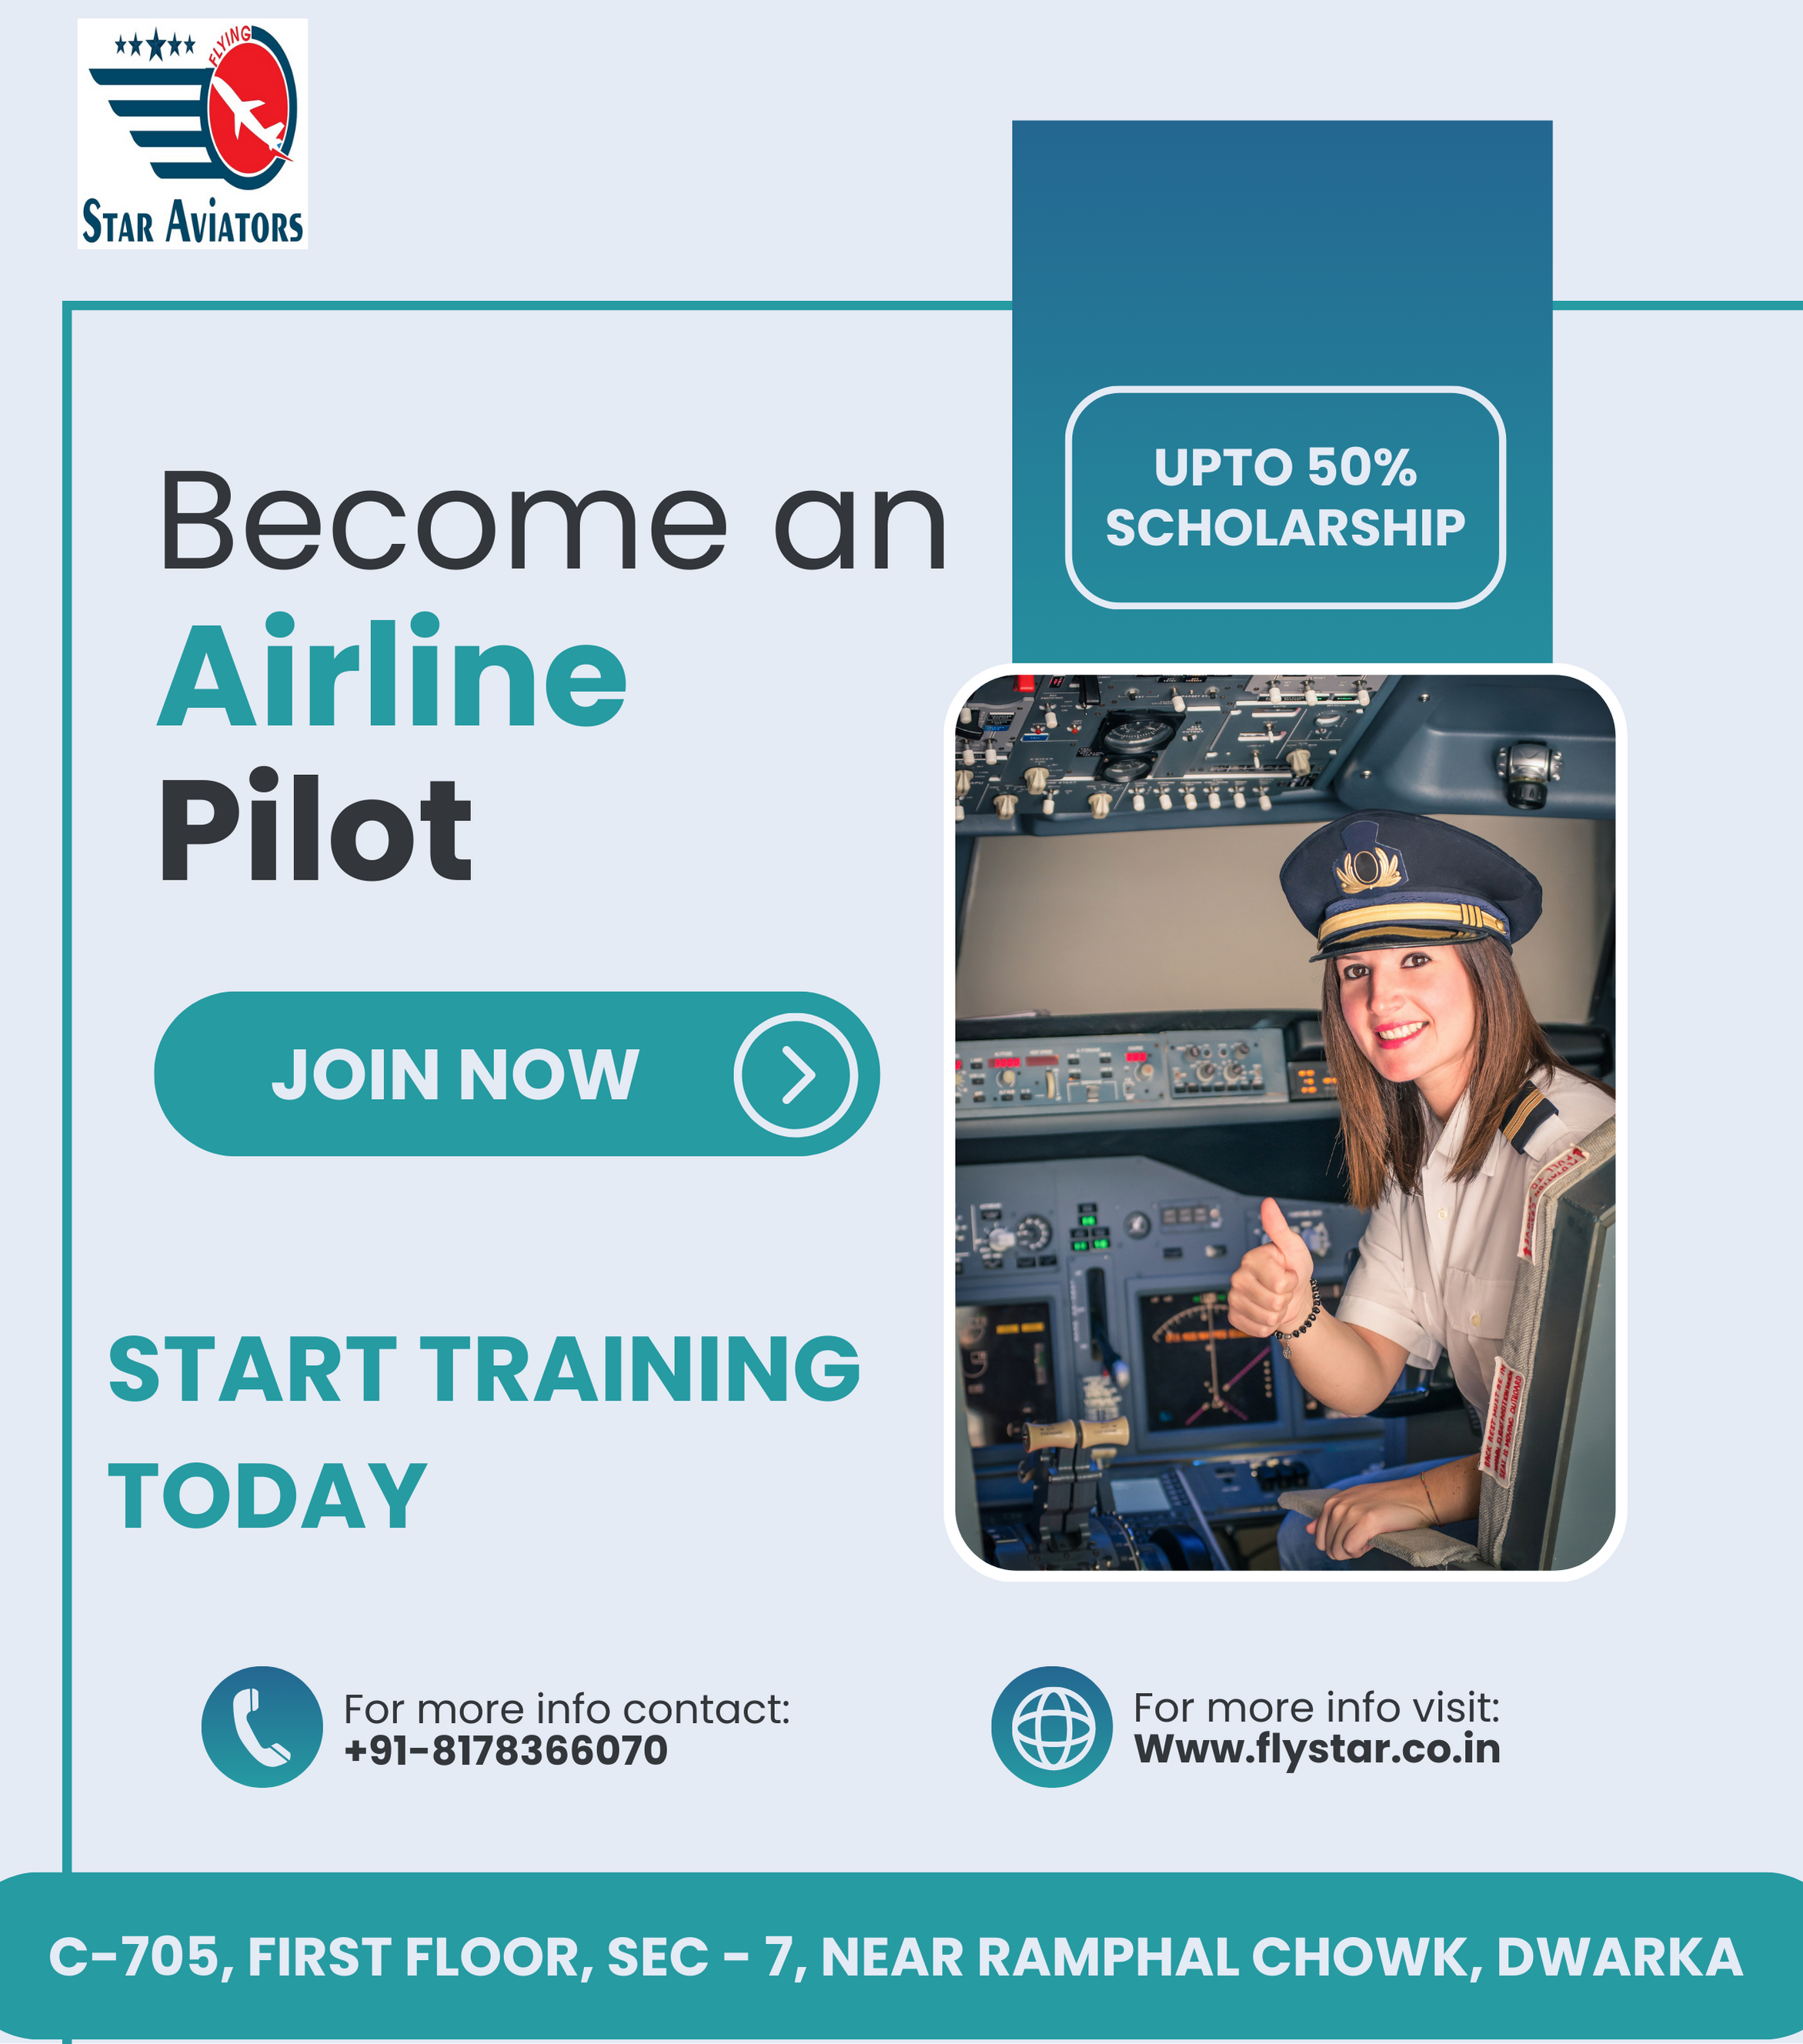 Pilot Training institute in India - Flying Star Aviators